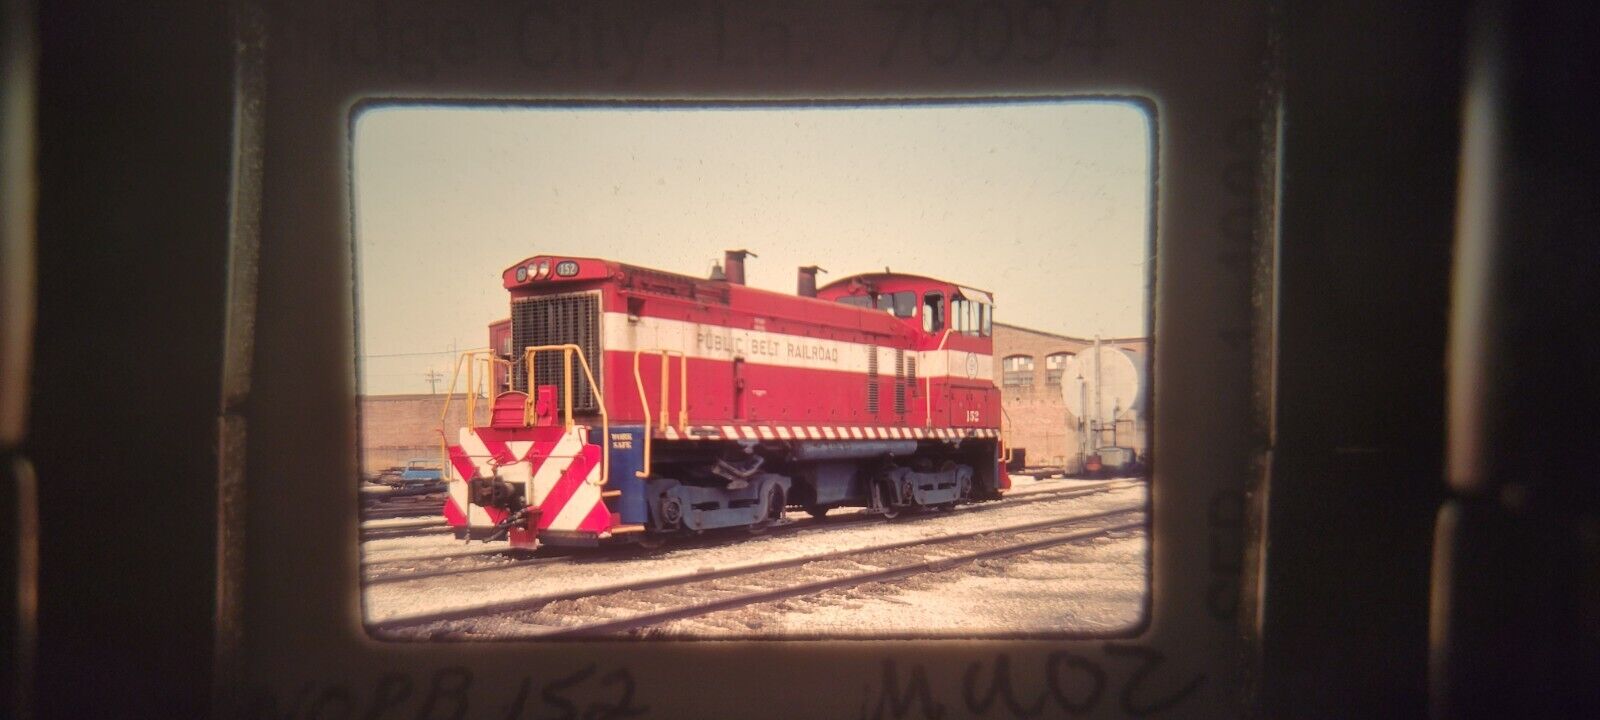 XMU02 TRAIN ENGINE LOCOMOTIVE 35MM SLIDE NOPB 152, NEW ORLEANS, LA 1982